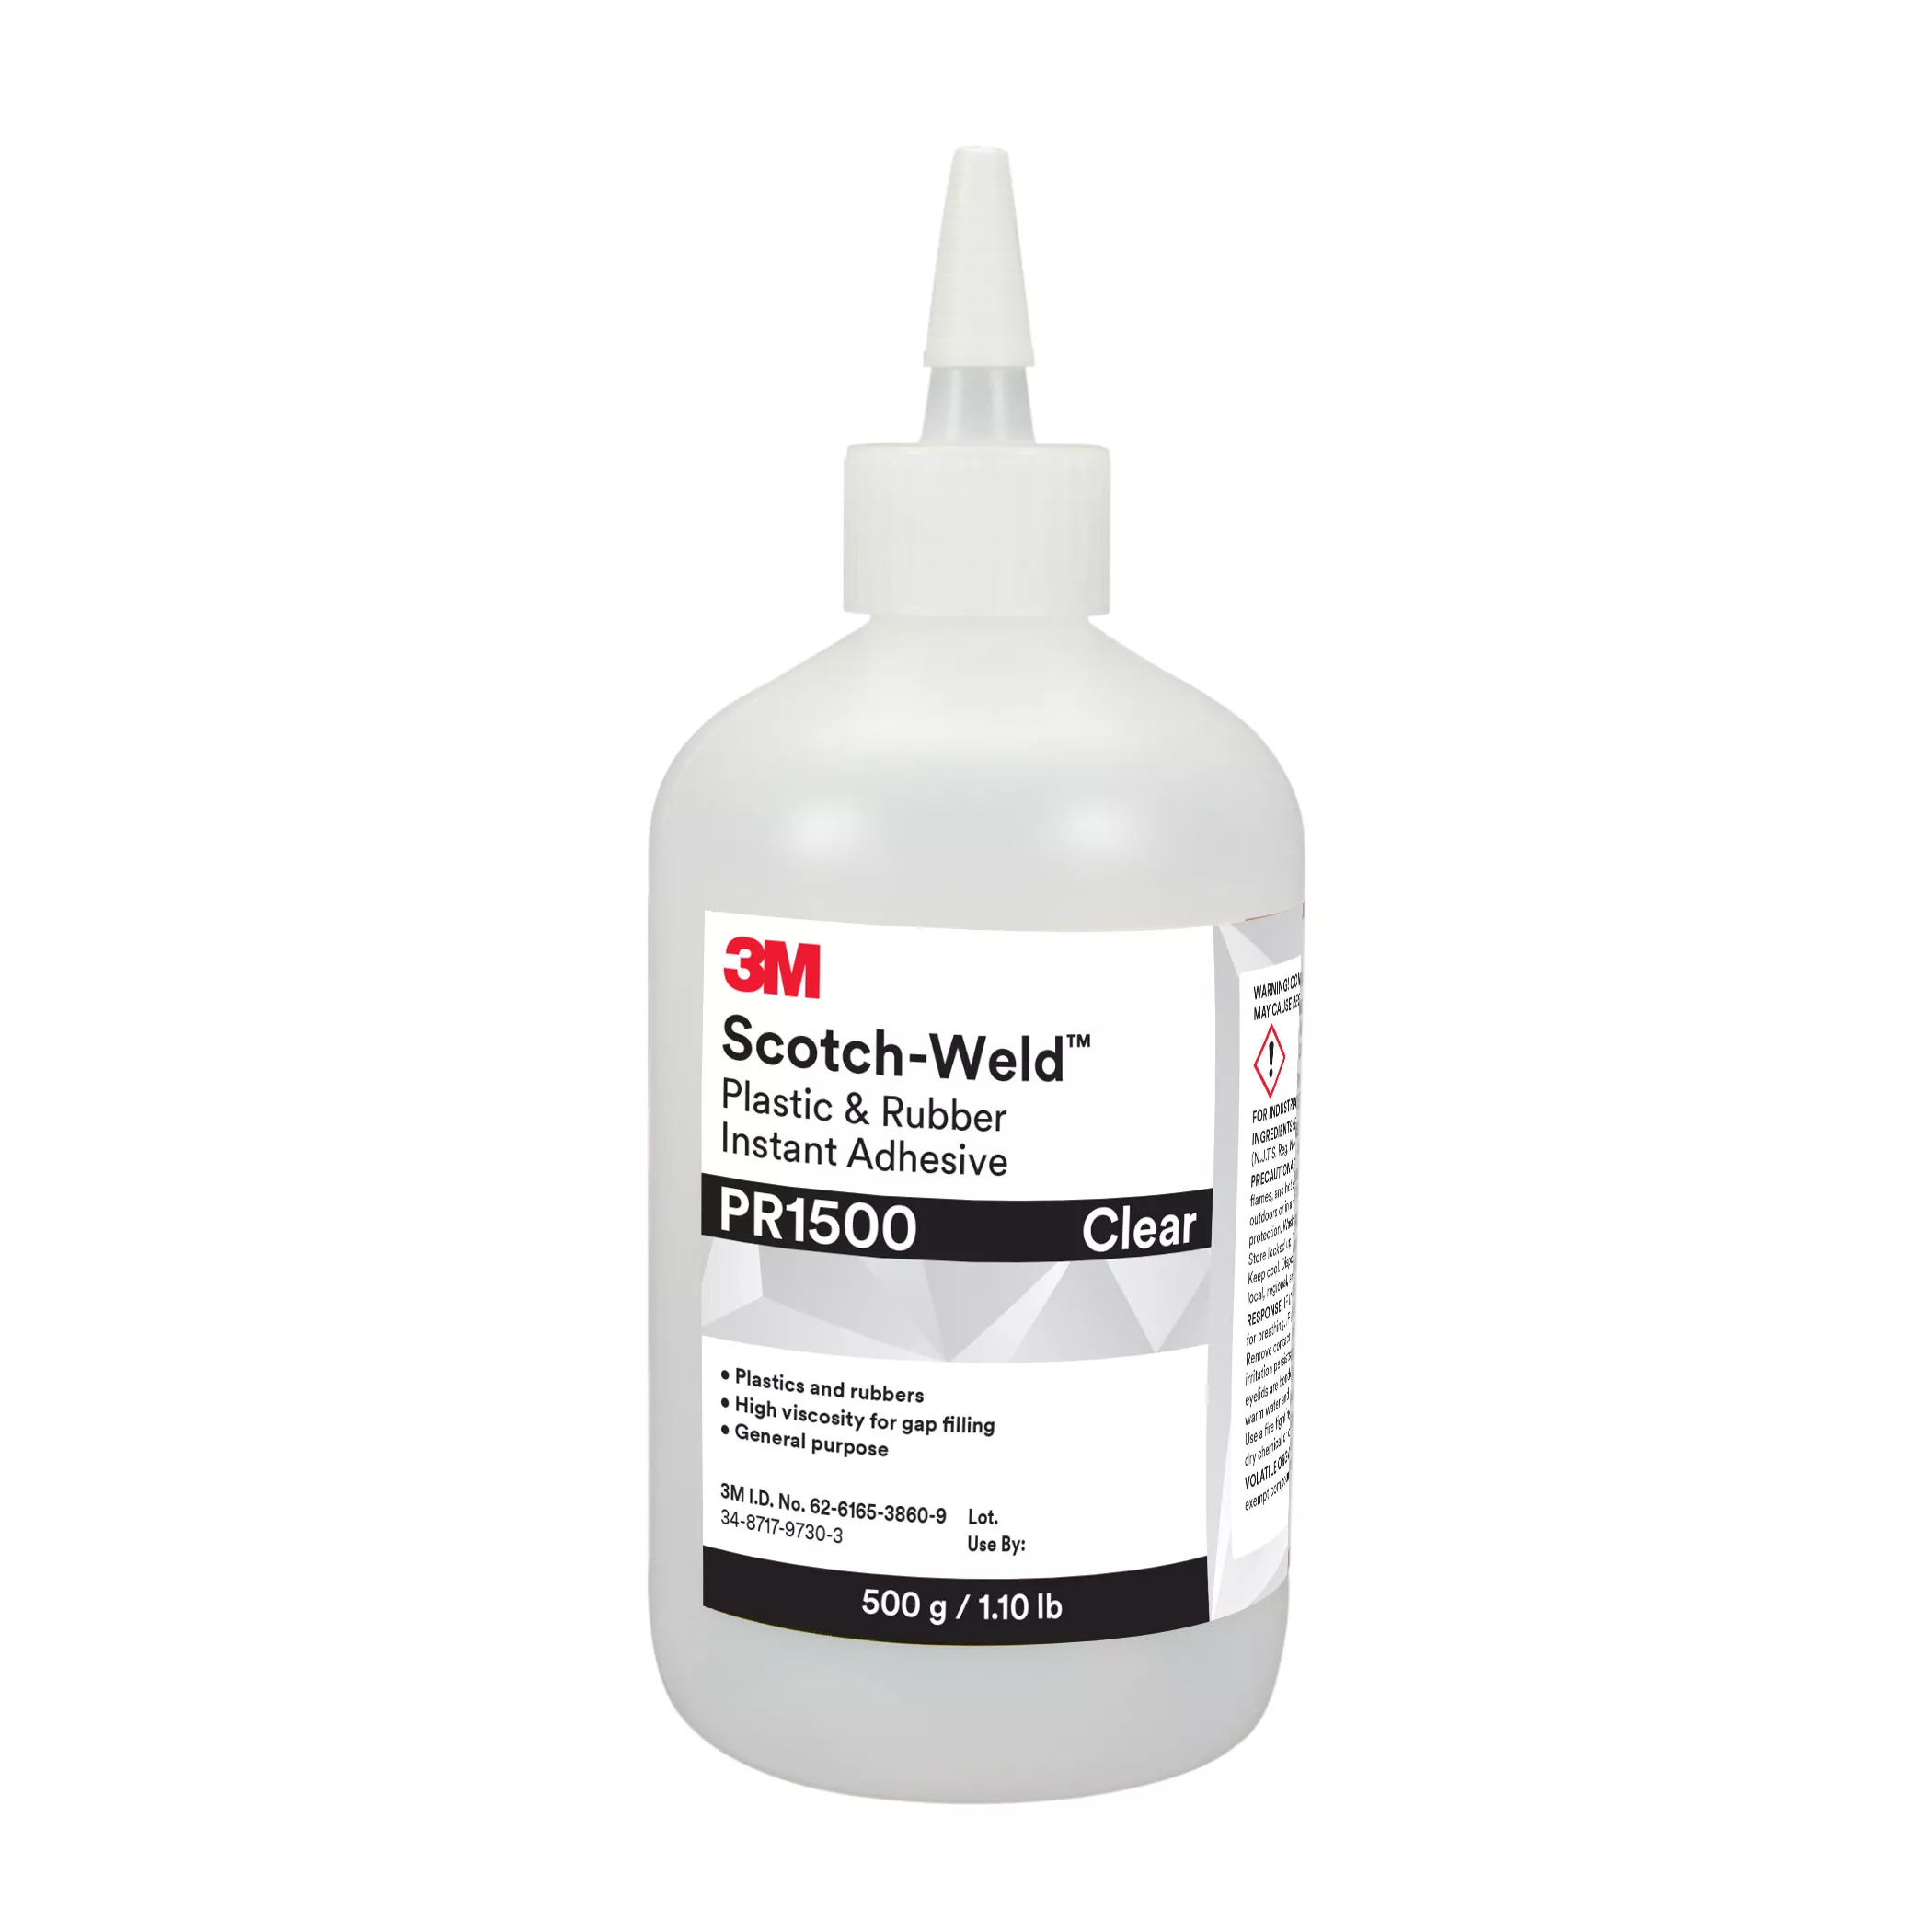 3M™ Scotch-Weld™ Plastic & Rubber Instant Adhesive PR1500, Clear, 500
Gram, 1 Bottle/Case